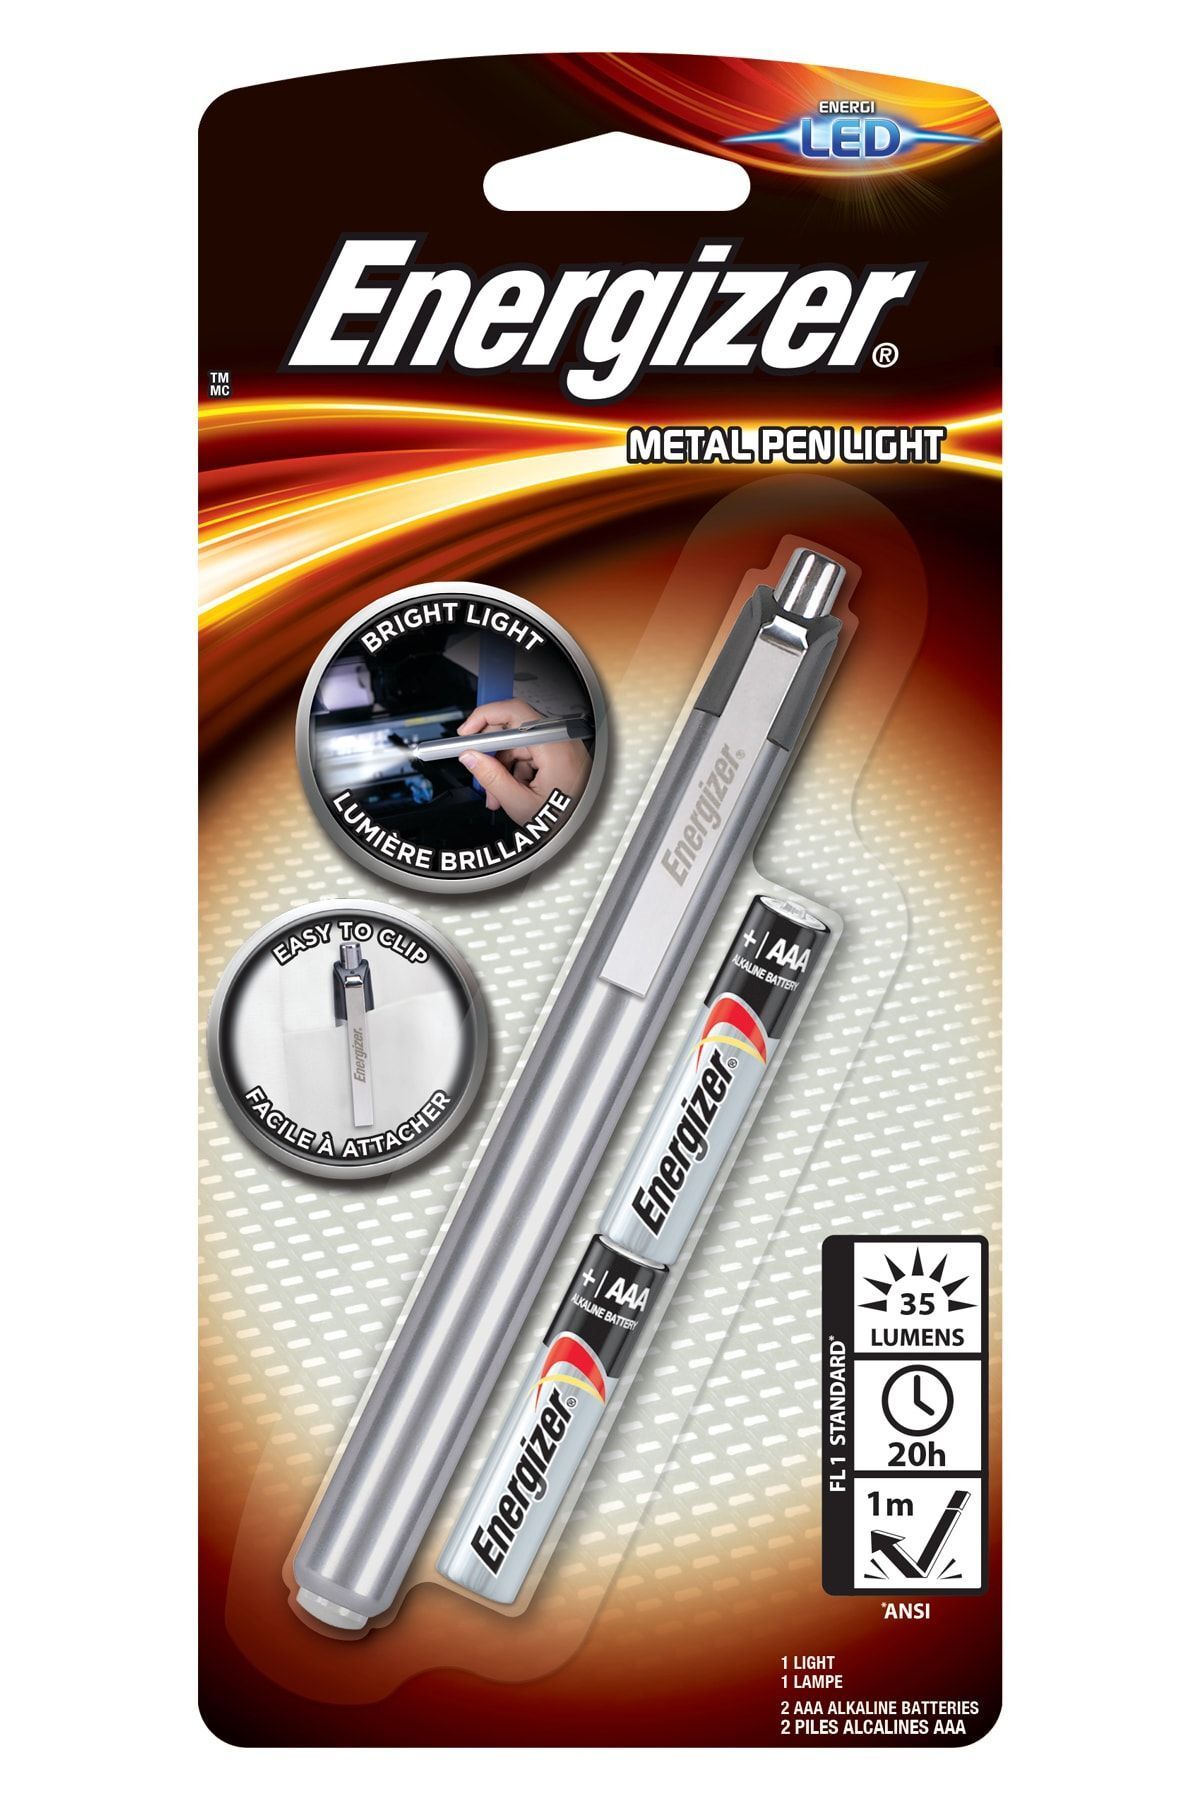 Energizer Energizer Fener FL Penlite +2AAA